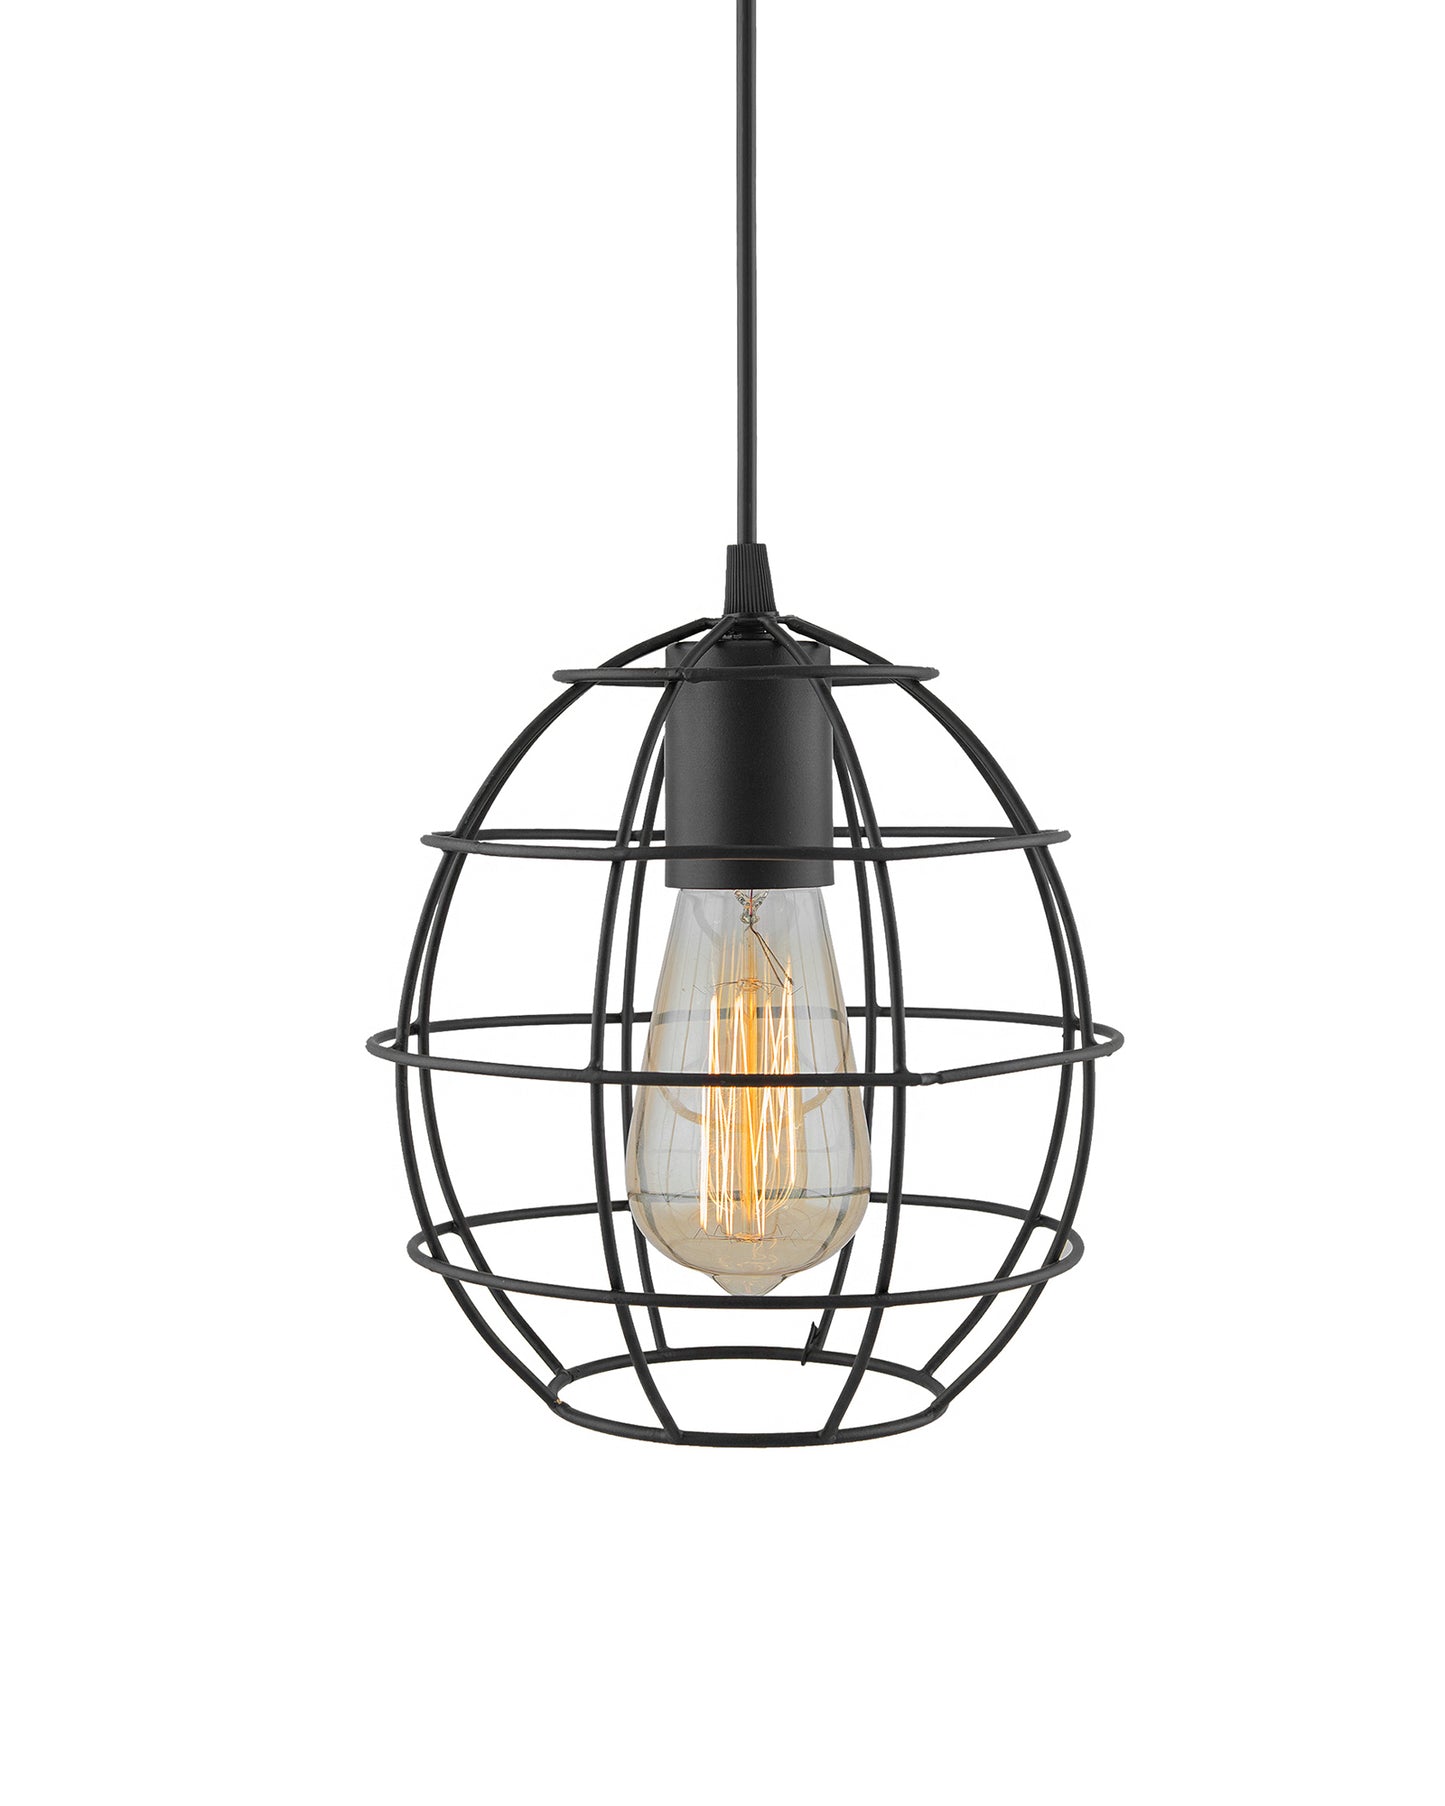 E27 Ediosn Vintage Black Metal Sphere Hanging Light, Pendant Ceiling Light Lamp